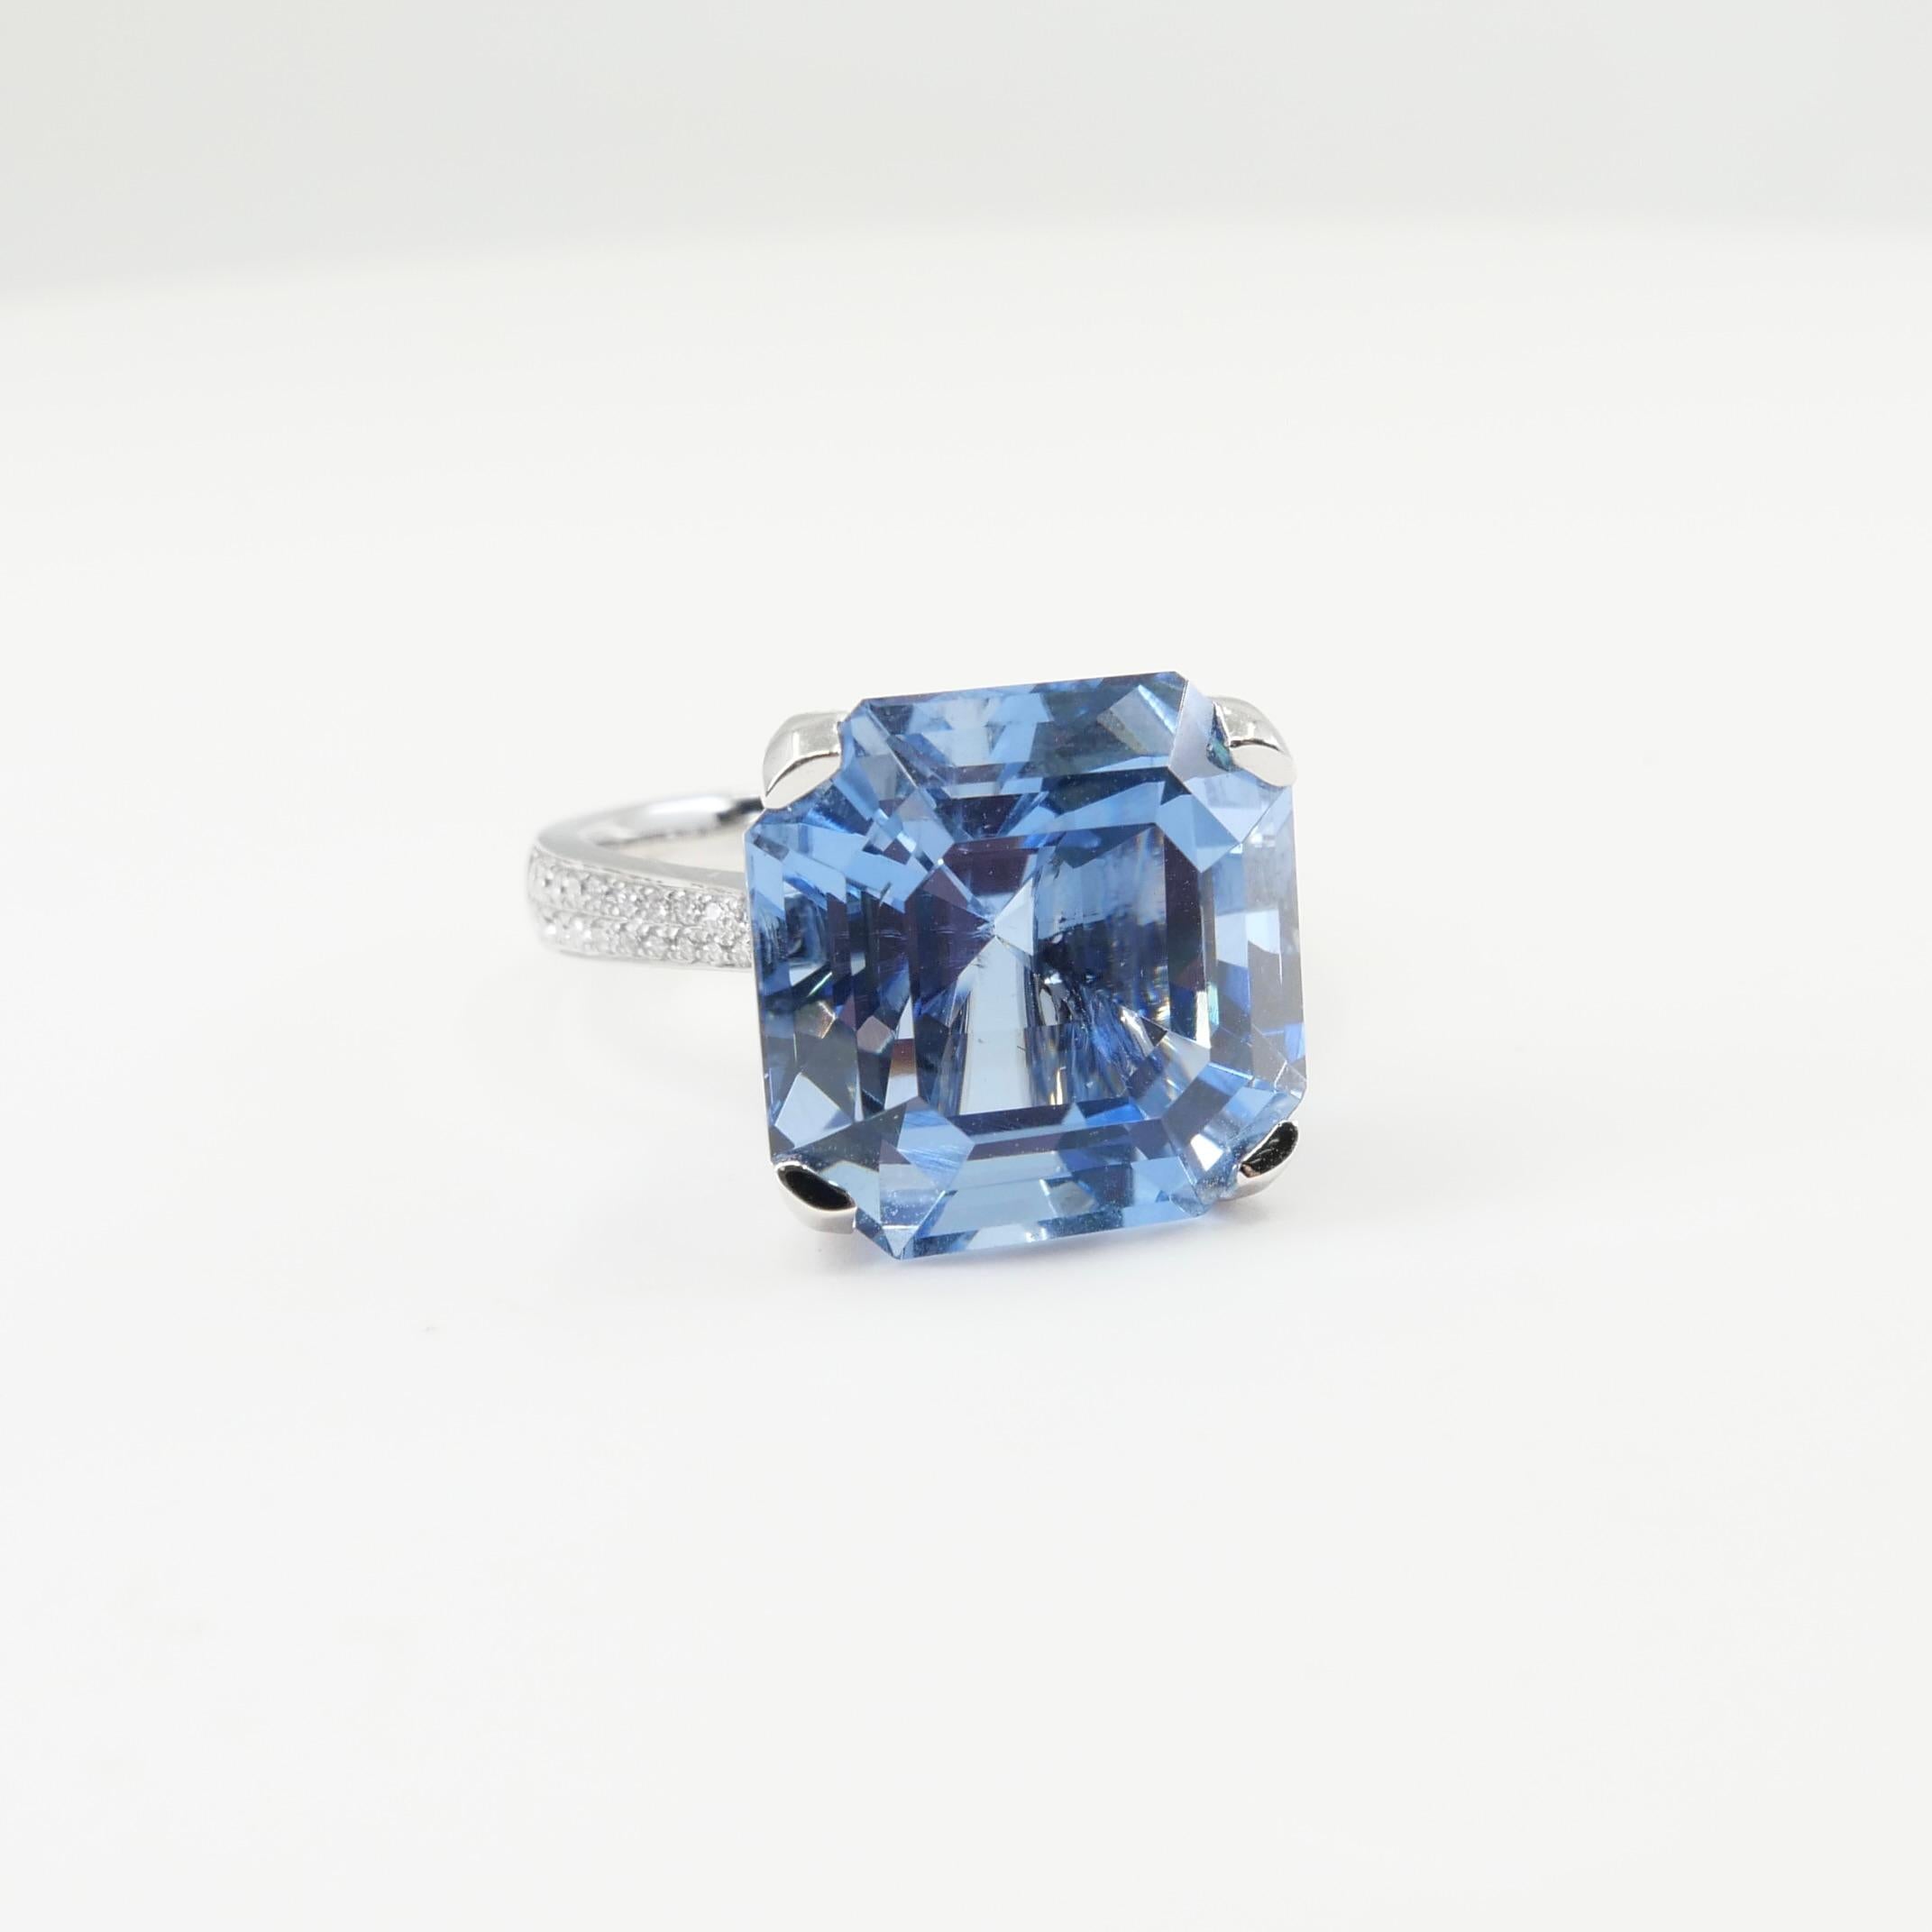 Certified 11.23 Cts Asscher Cut Aquamarine Diamond Ring, True Santa Maria Color 9